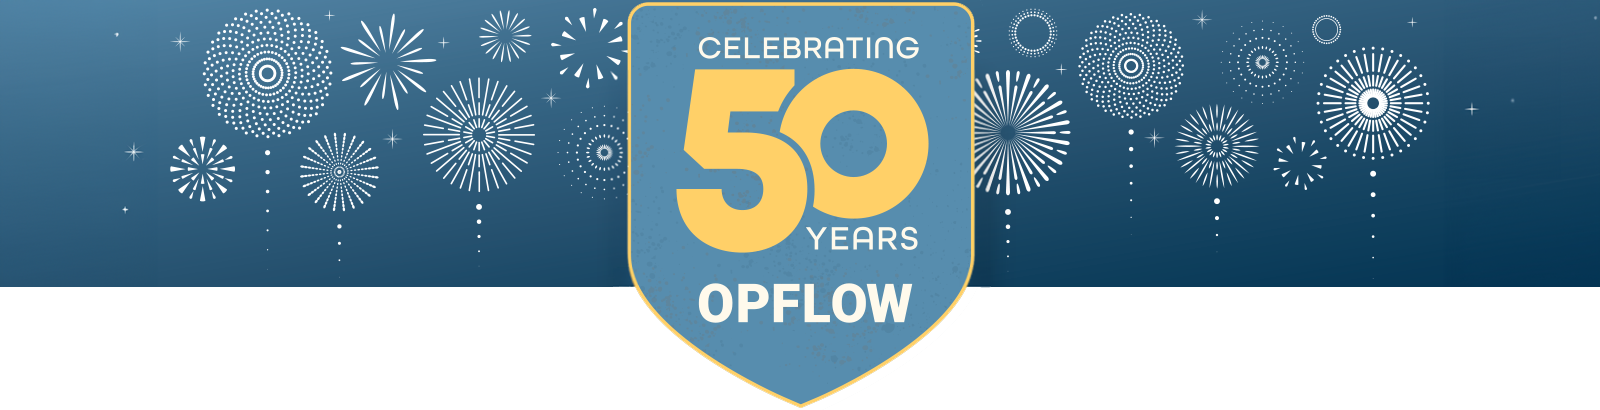 Opflow 50th